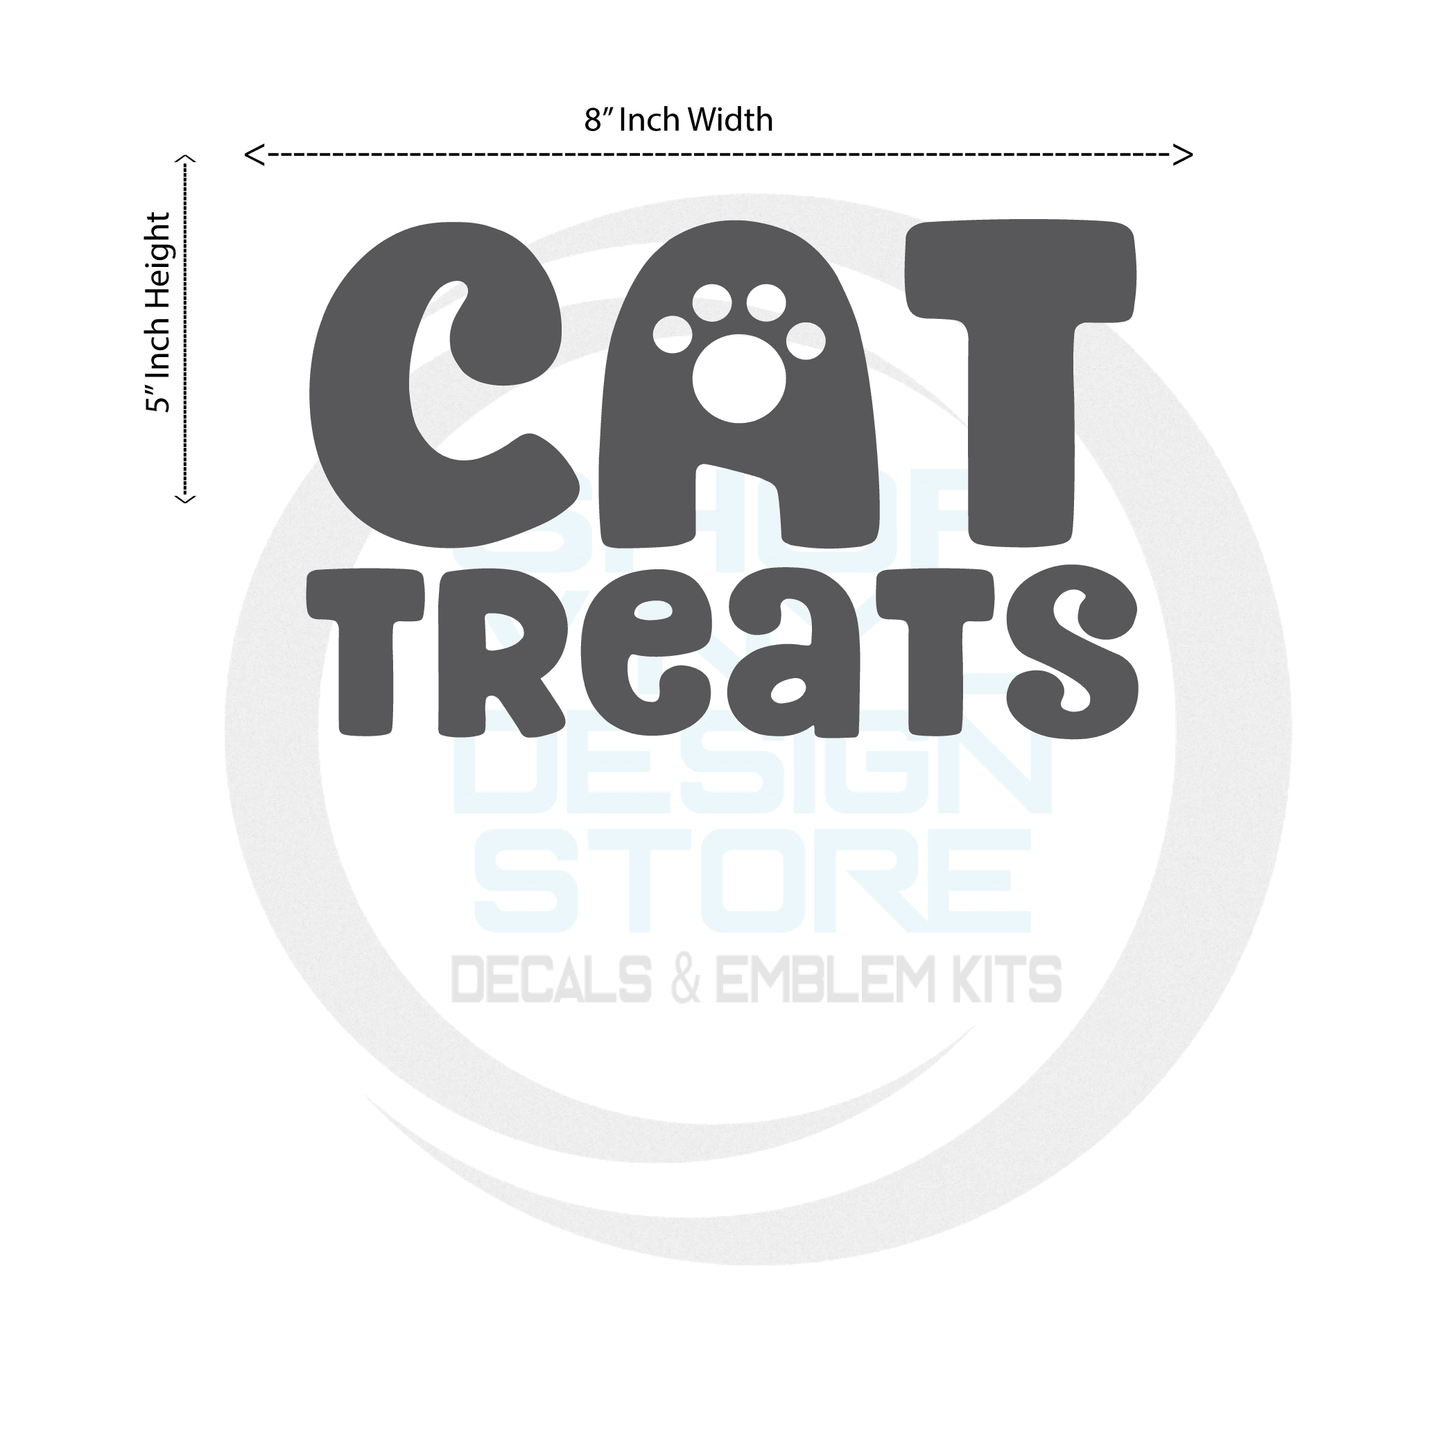 ShopVinylDesignStore.com Cat Treats with Paw Print Wide 8"W x 5"H Shop Vinyl Design decals stickers